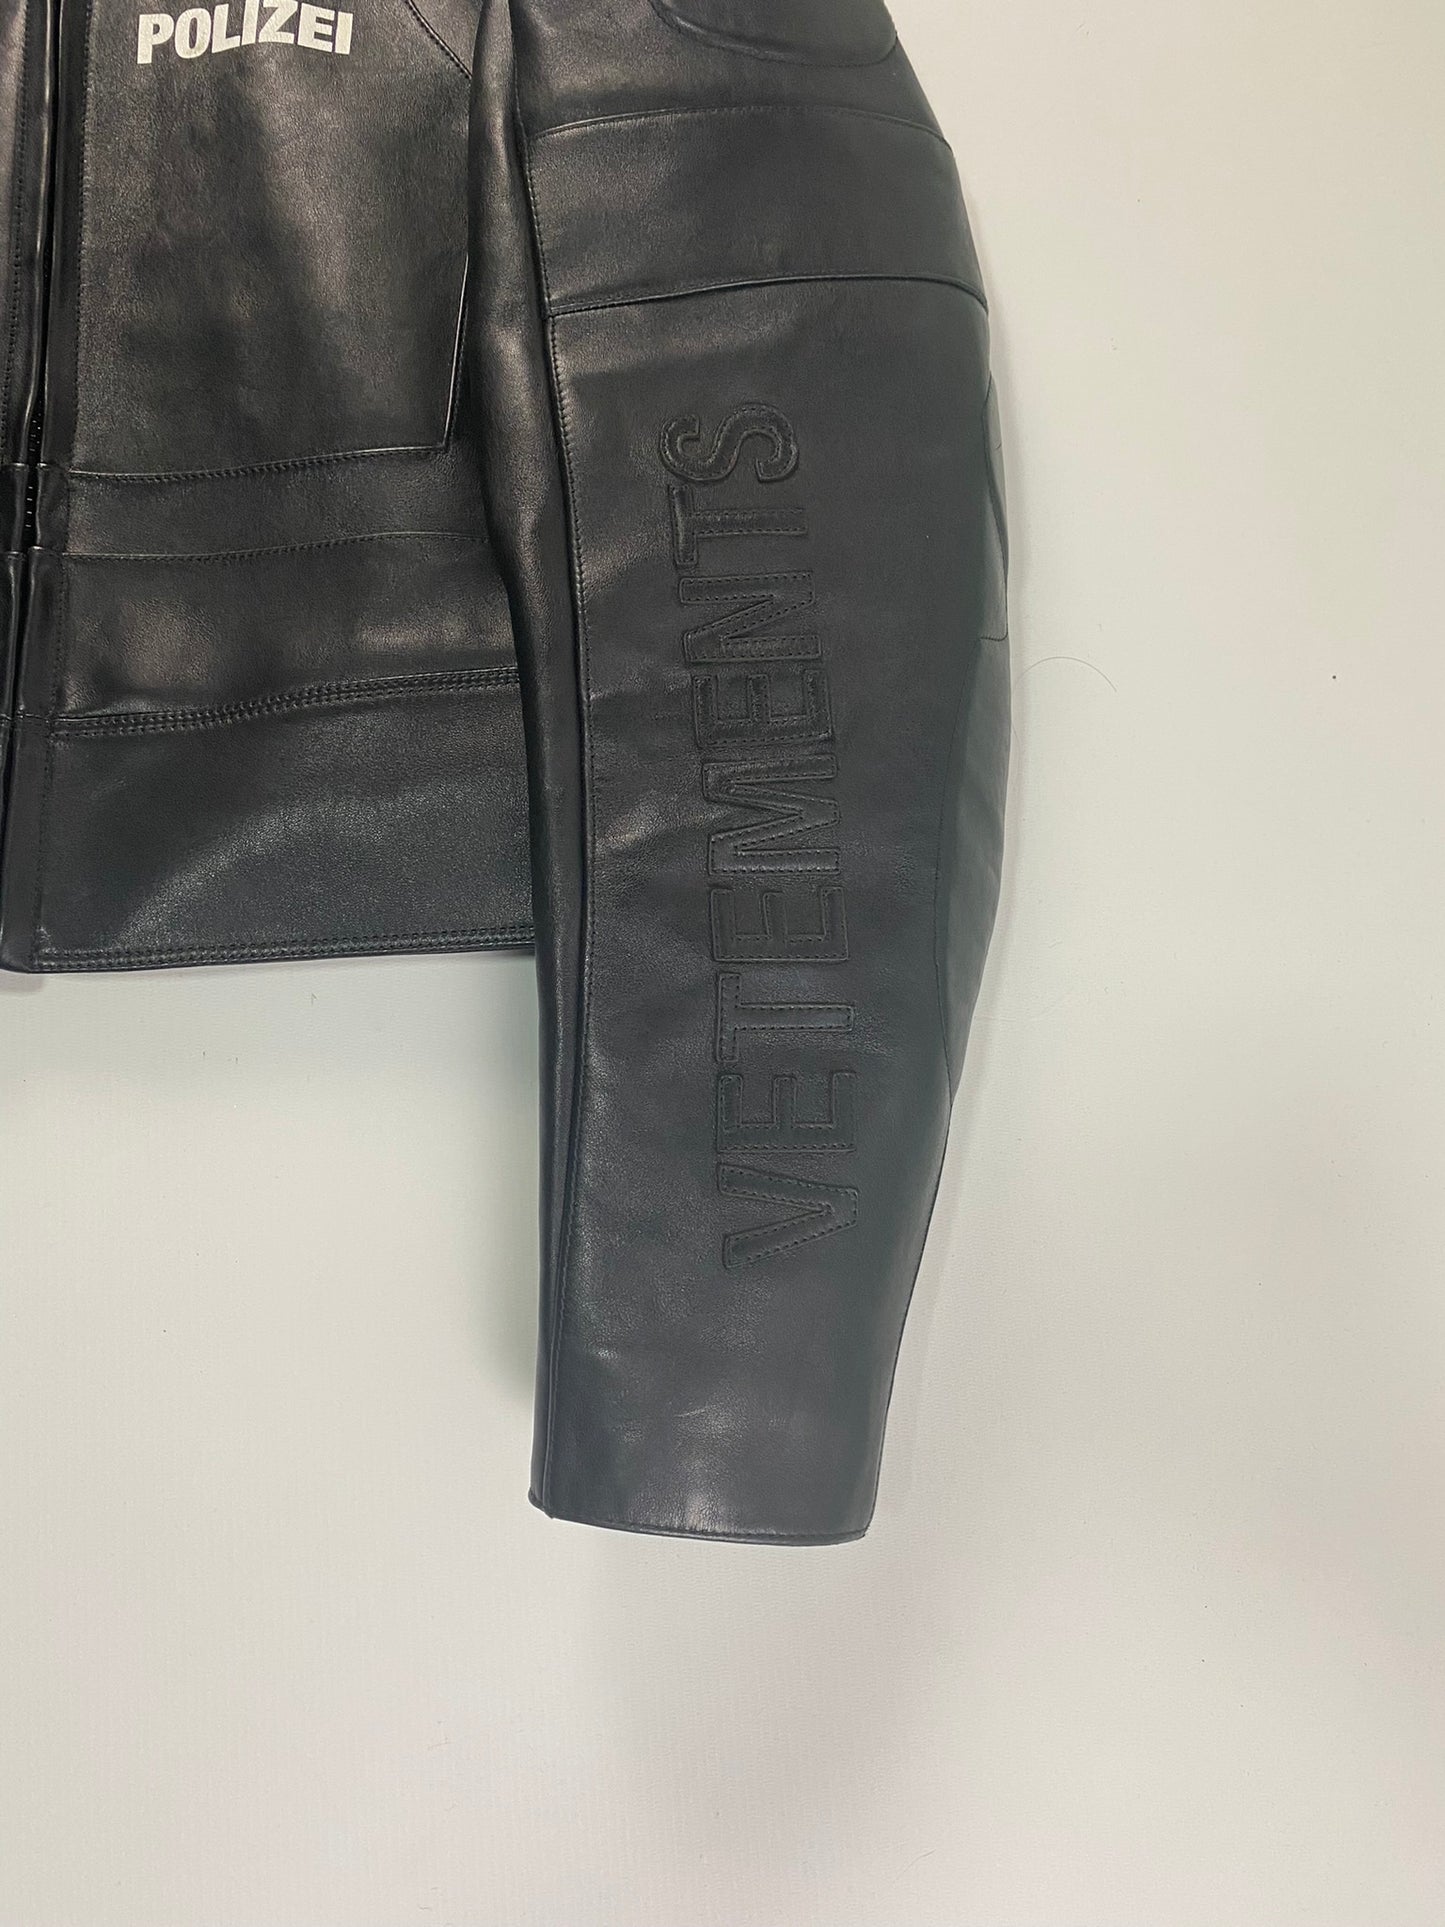 Vetements SS17 runway Polizei moto racing leather jacket in black SZ:L